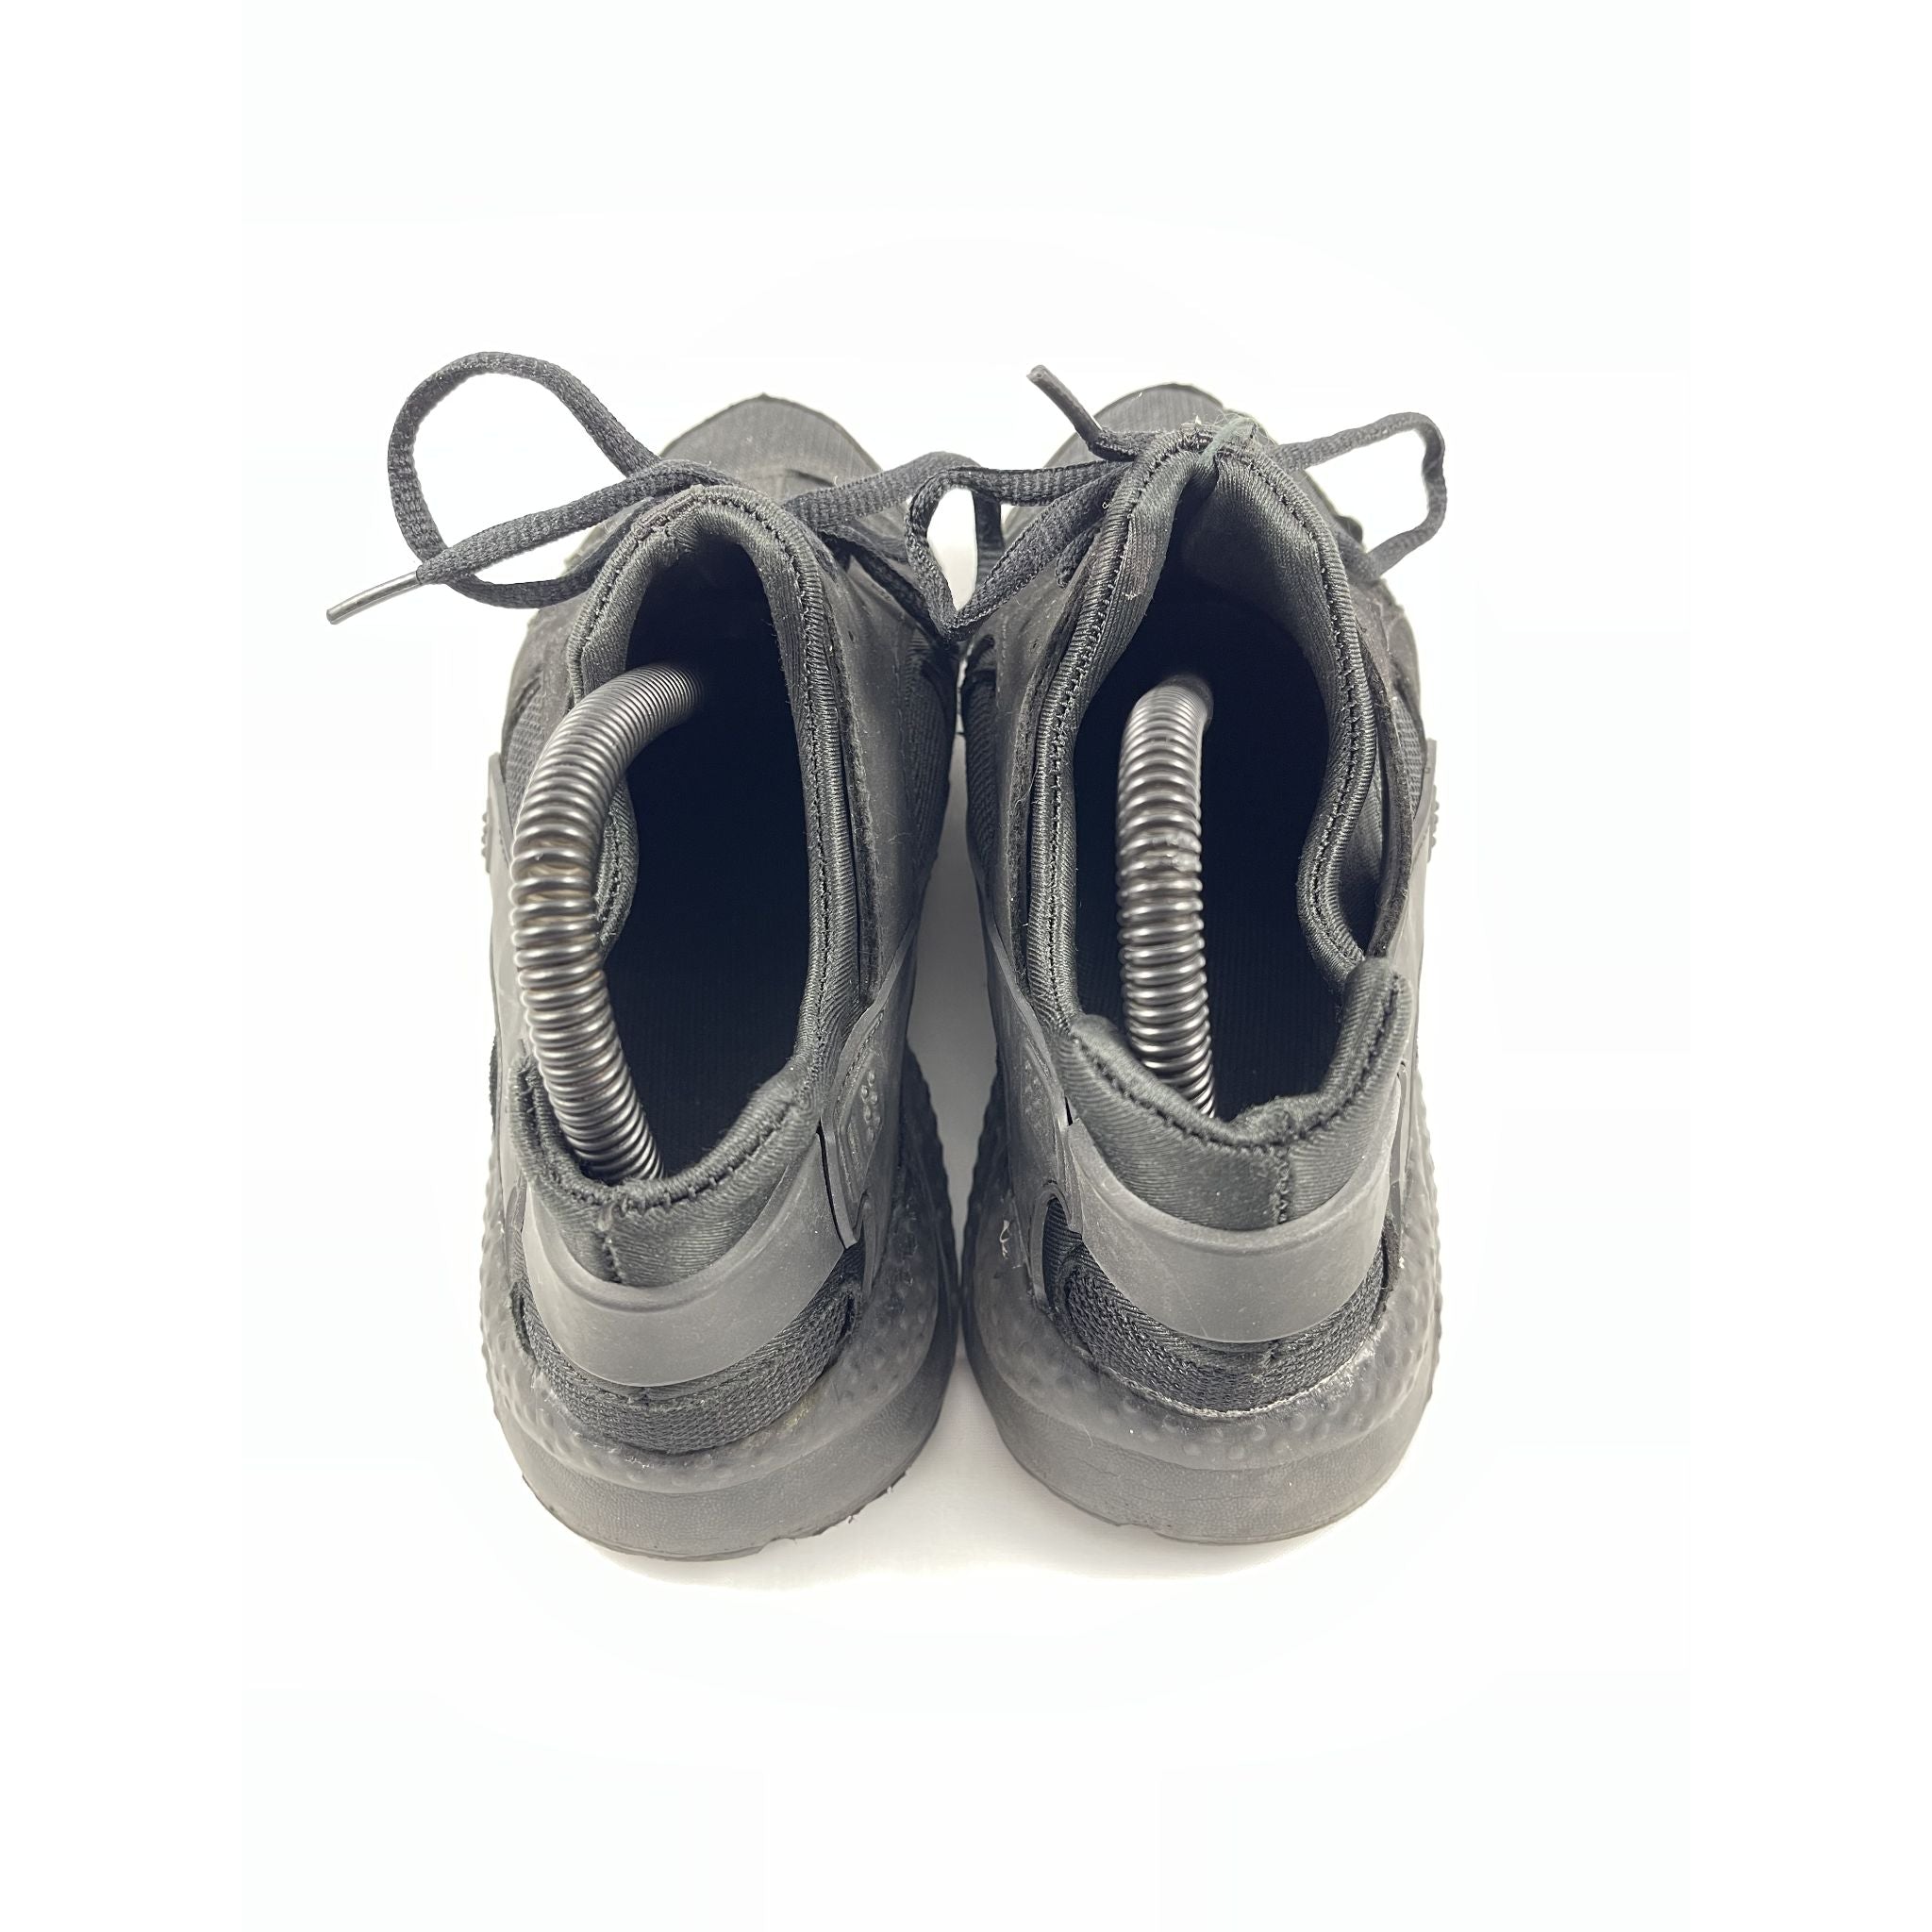 Black Running Shoes